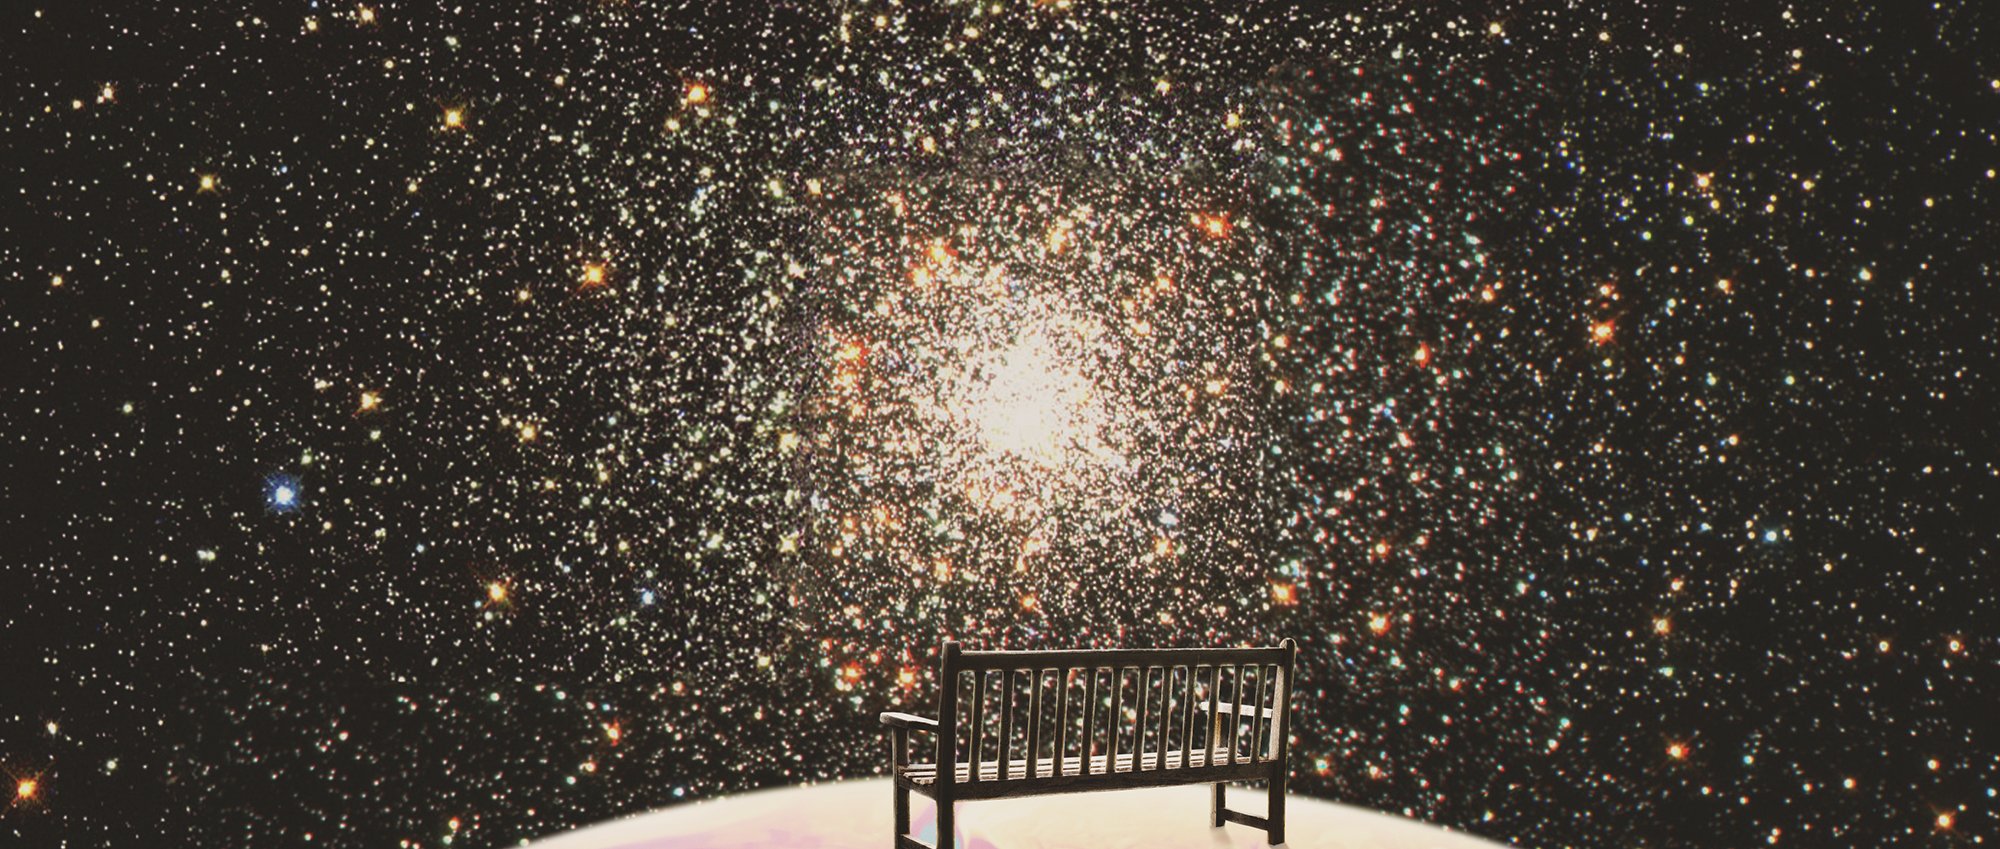 bench under starry night sky